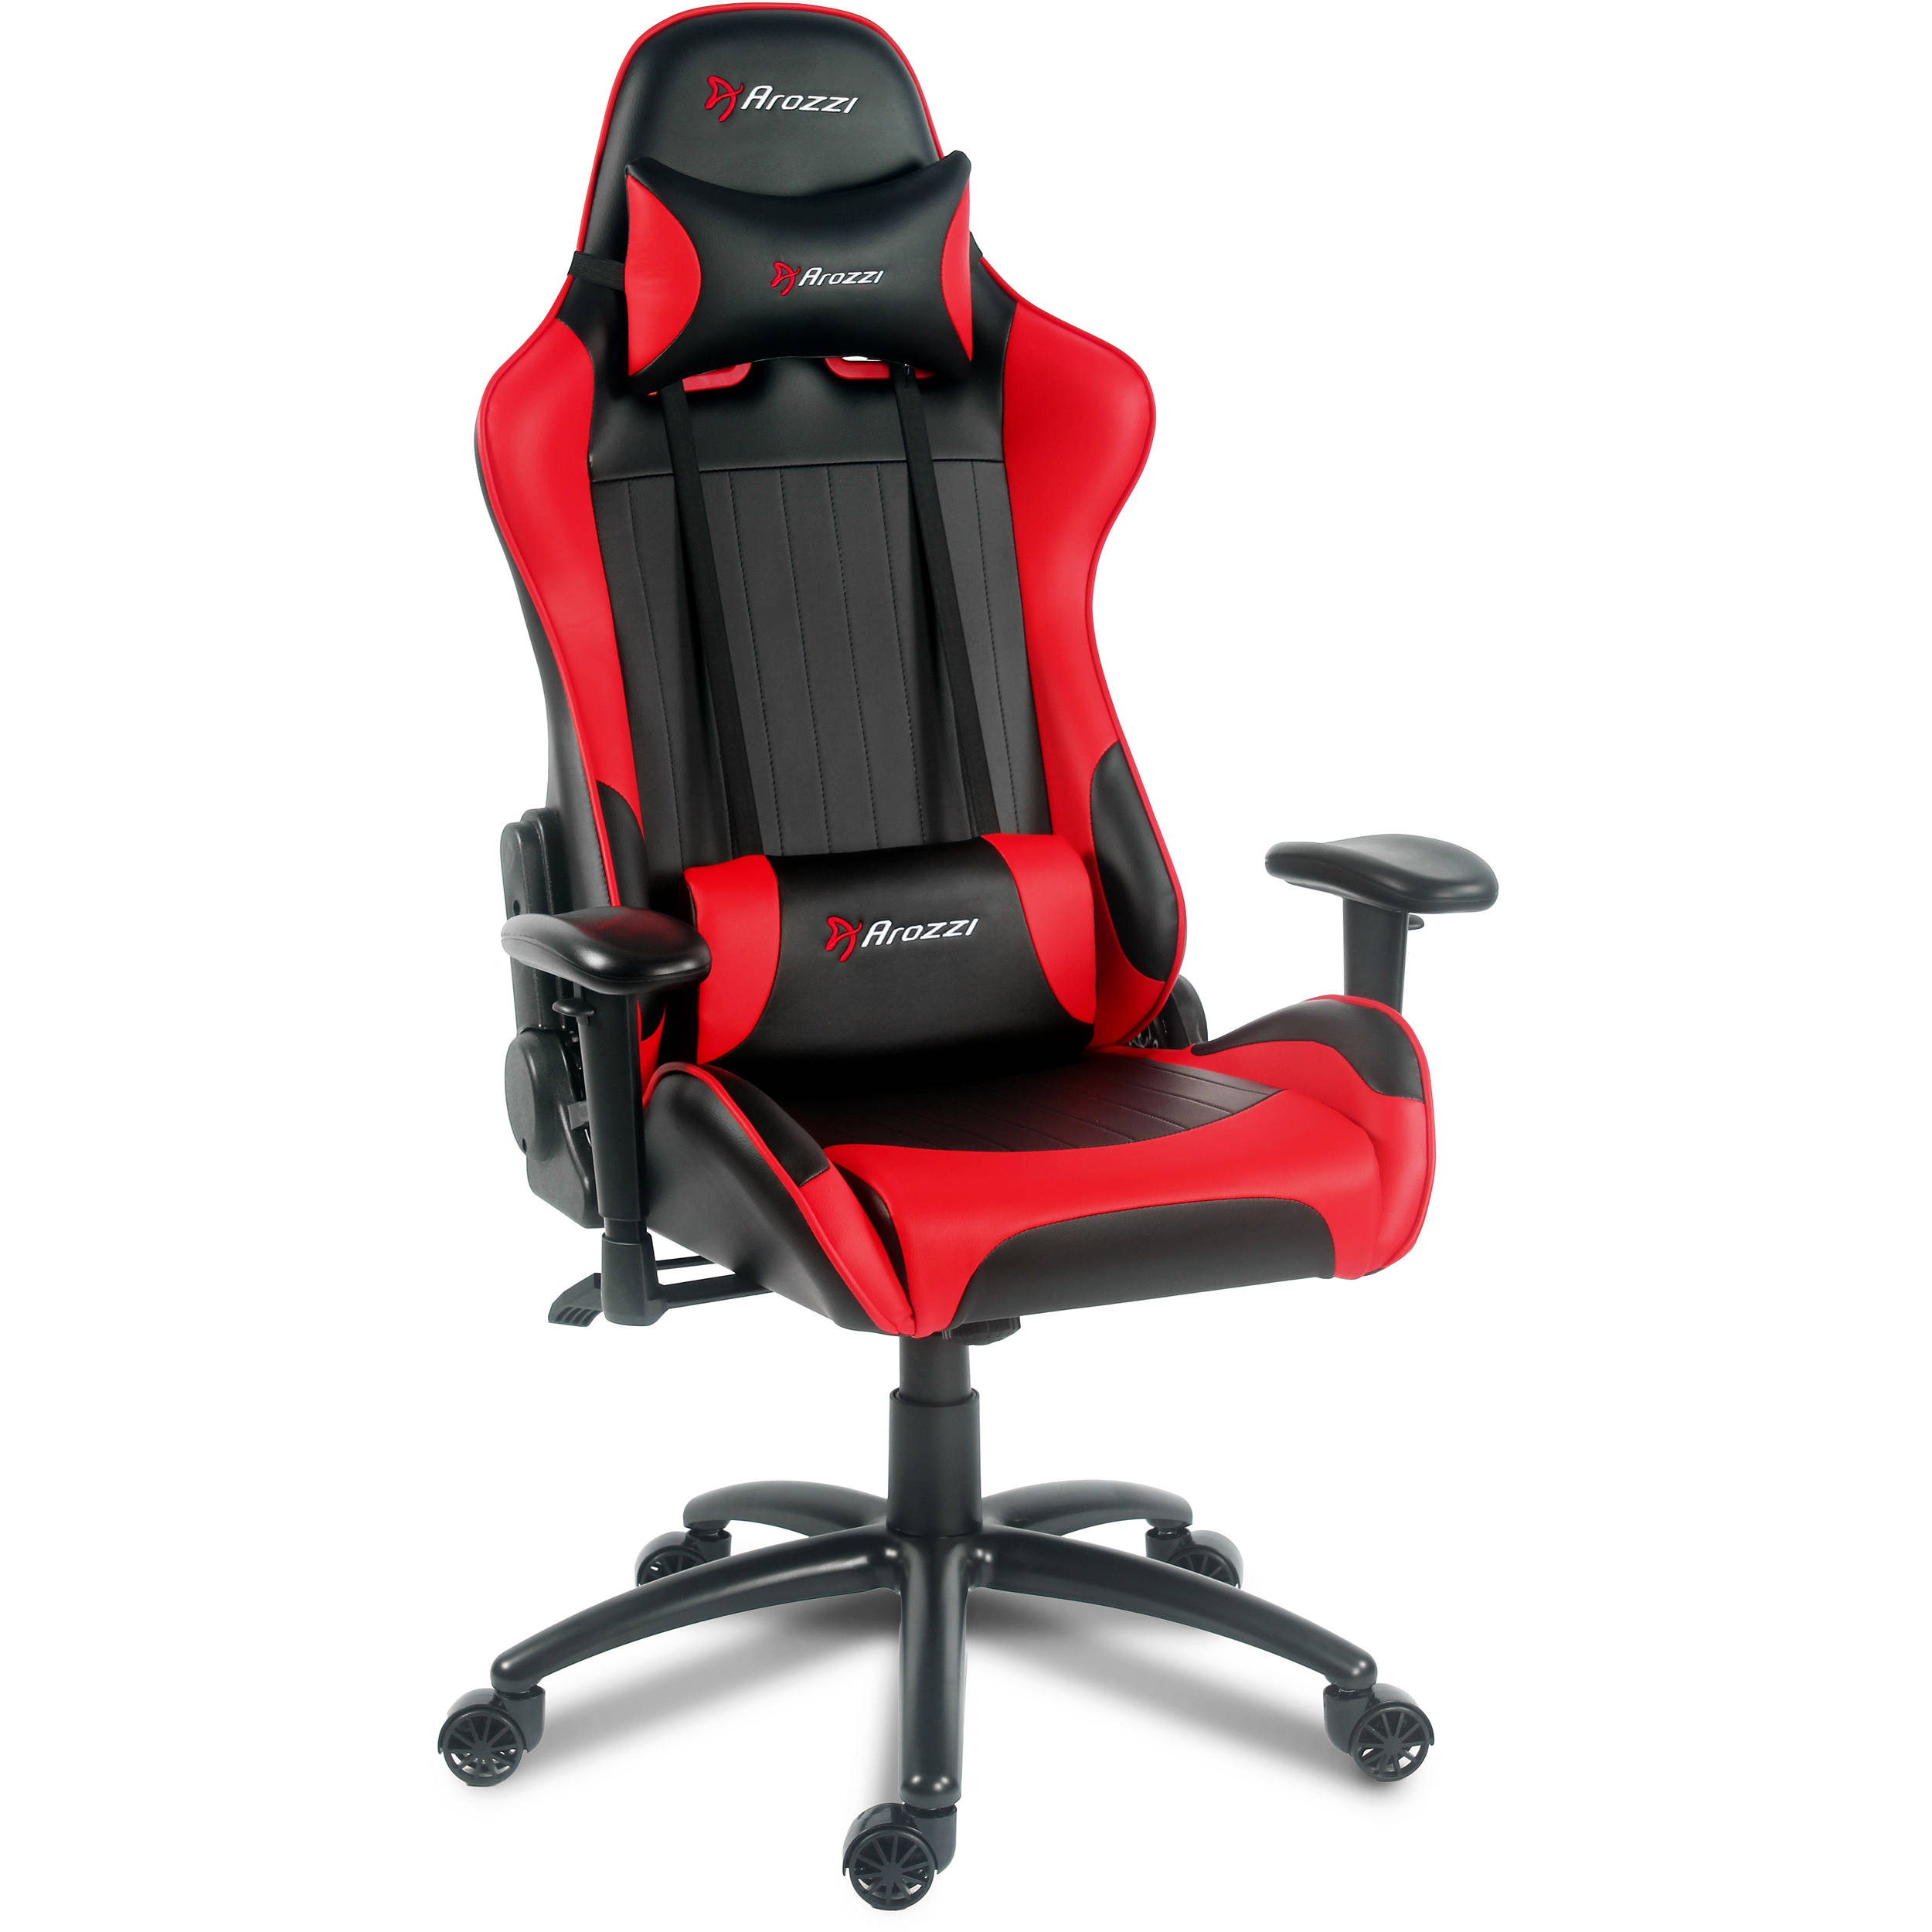 pro gaming chair arozzi verona rd verona gaming chair red